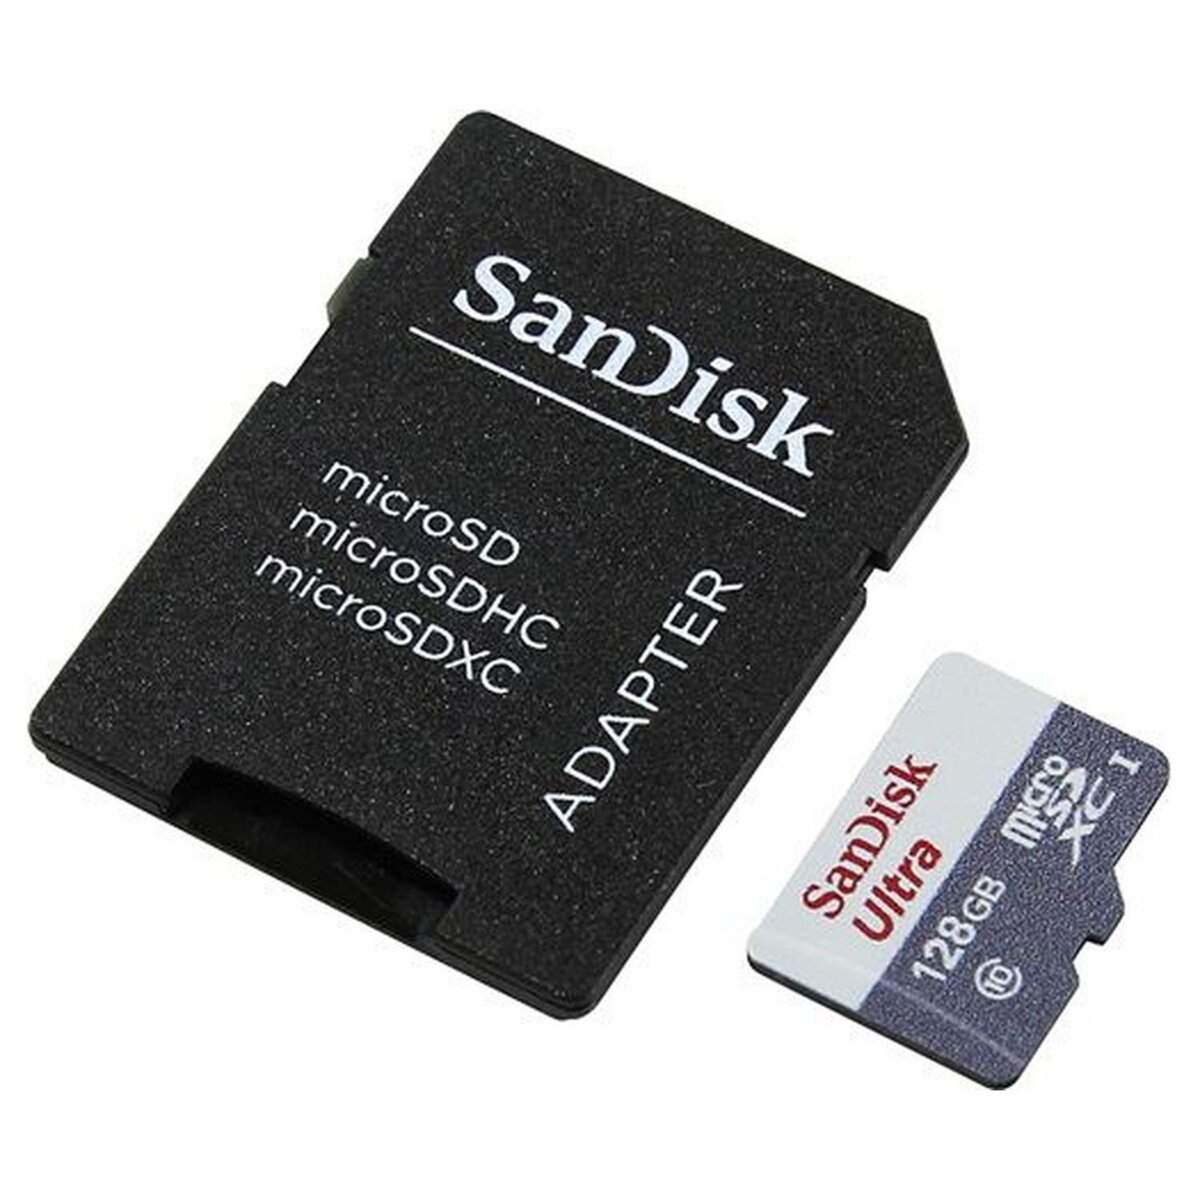 SanDisk 1 To Ultra Carte Mémoire microSDXC + Adaptateur SD